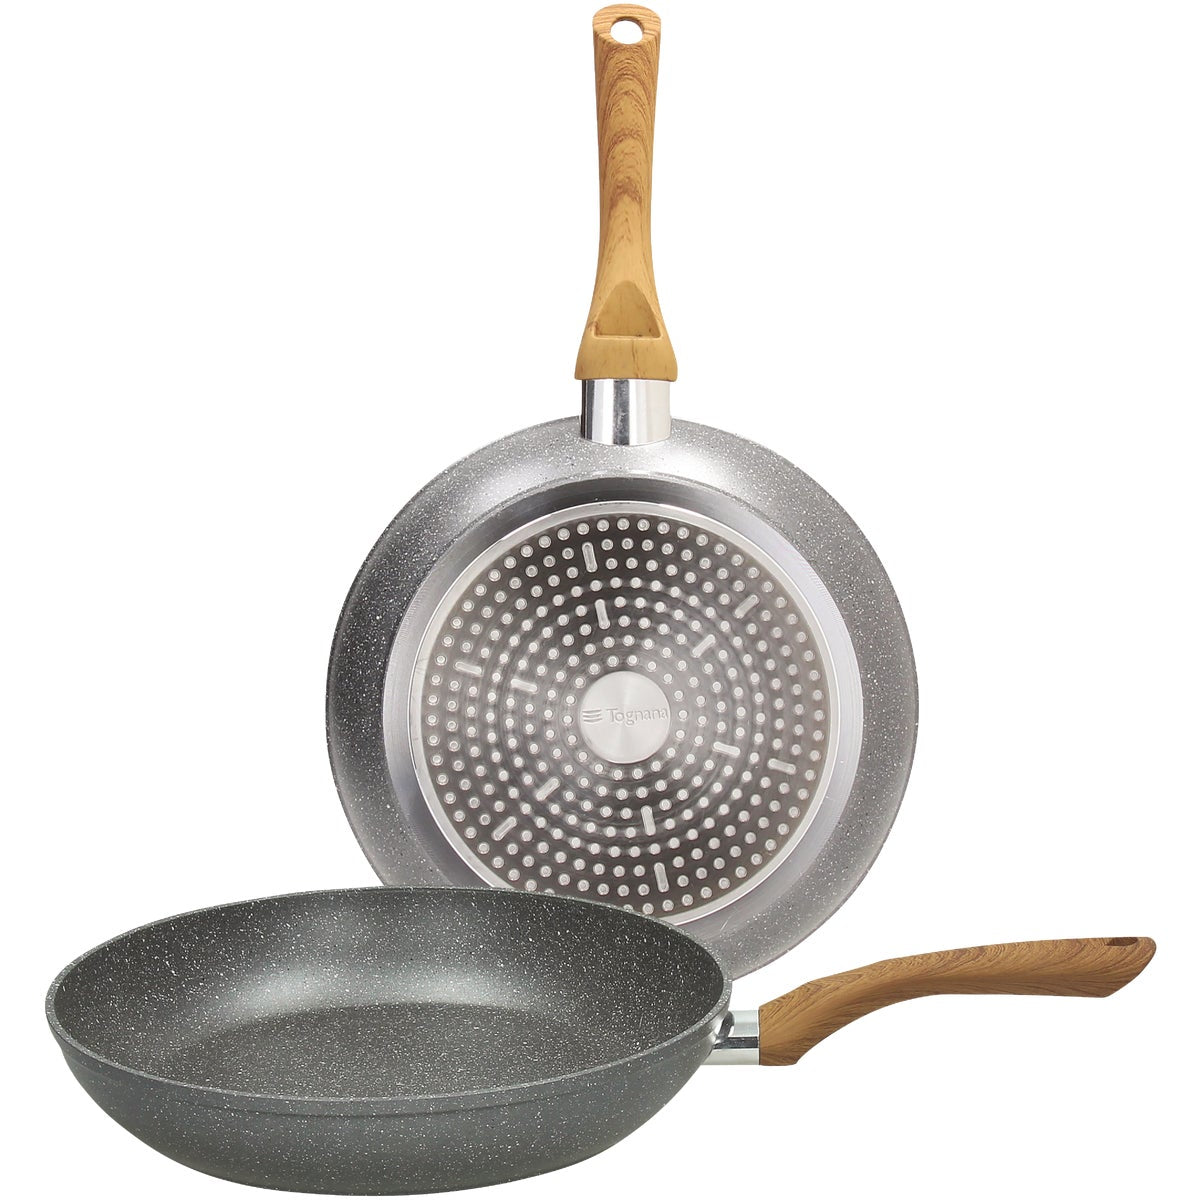 Tognana Wood & Stone Gray Metallic Frying Pan Set (2-Piece